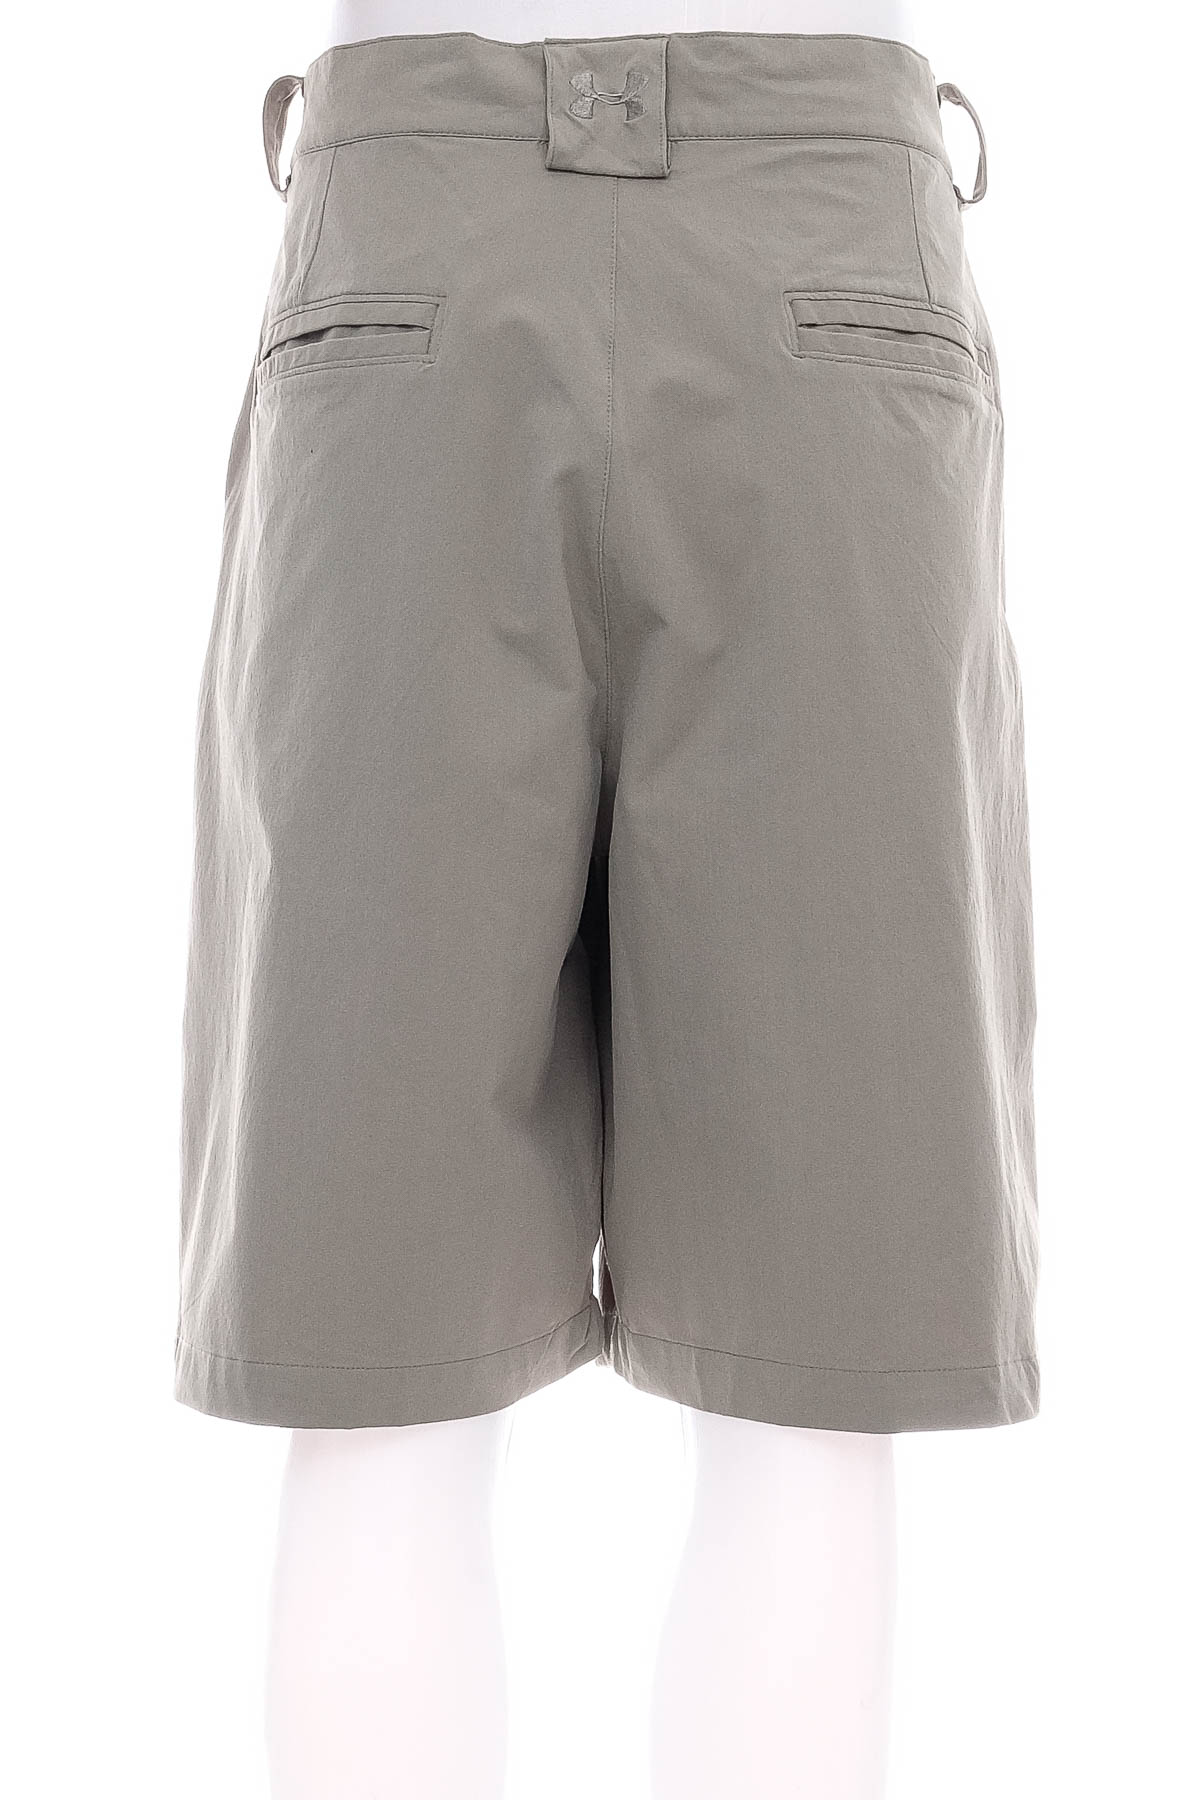 Men's shorts - UNDER ARMOUR - 1